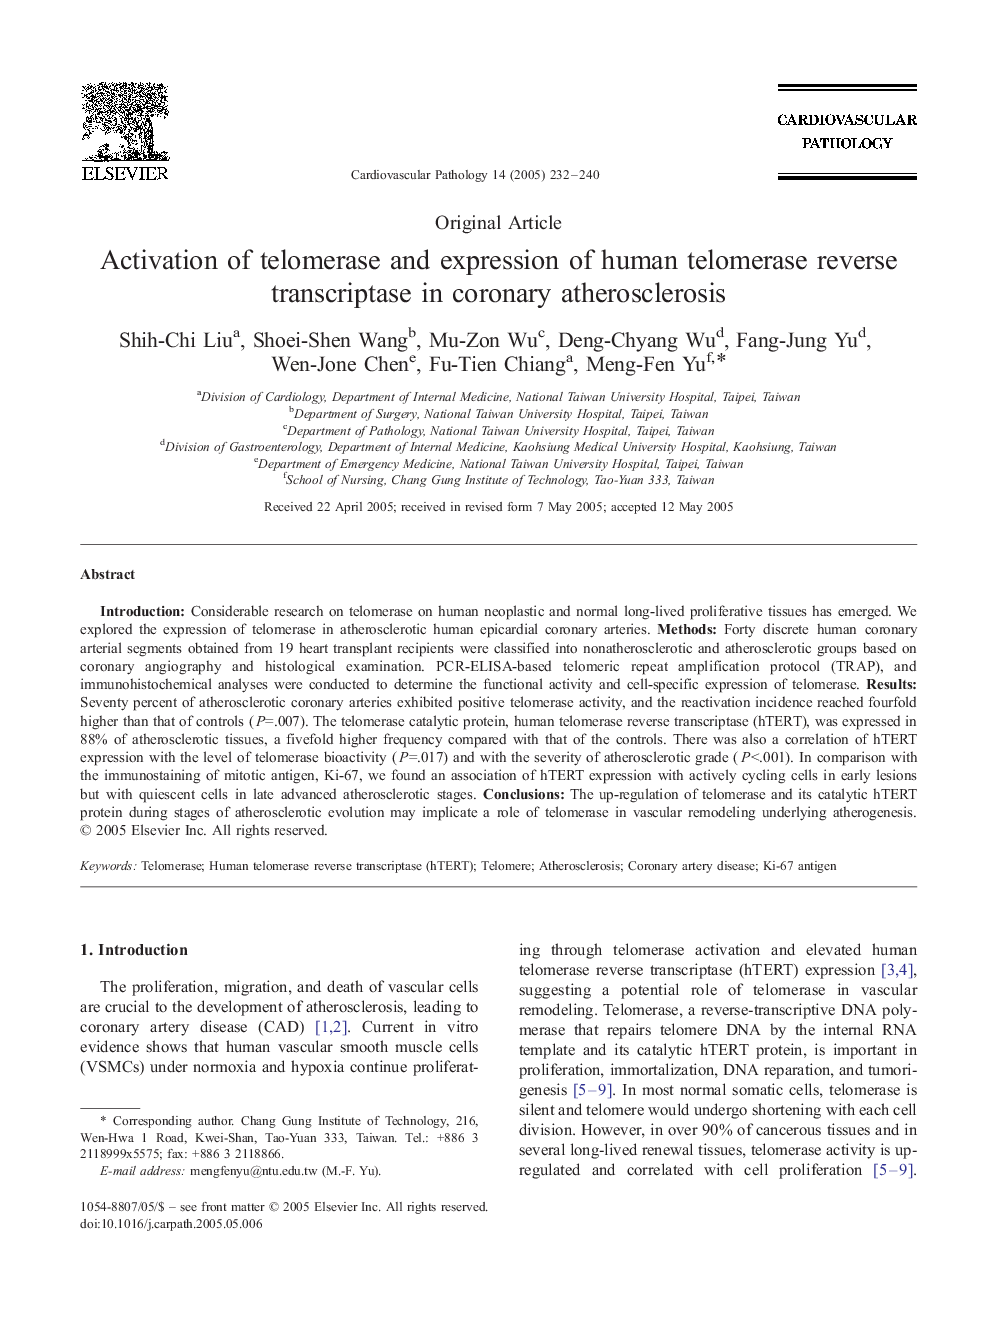 Activation of telomerase and expression of human telomerase reverse transcriptase in coronary atherosclerosis